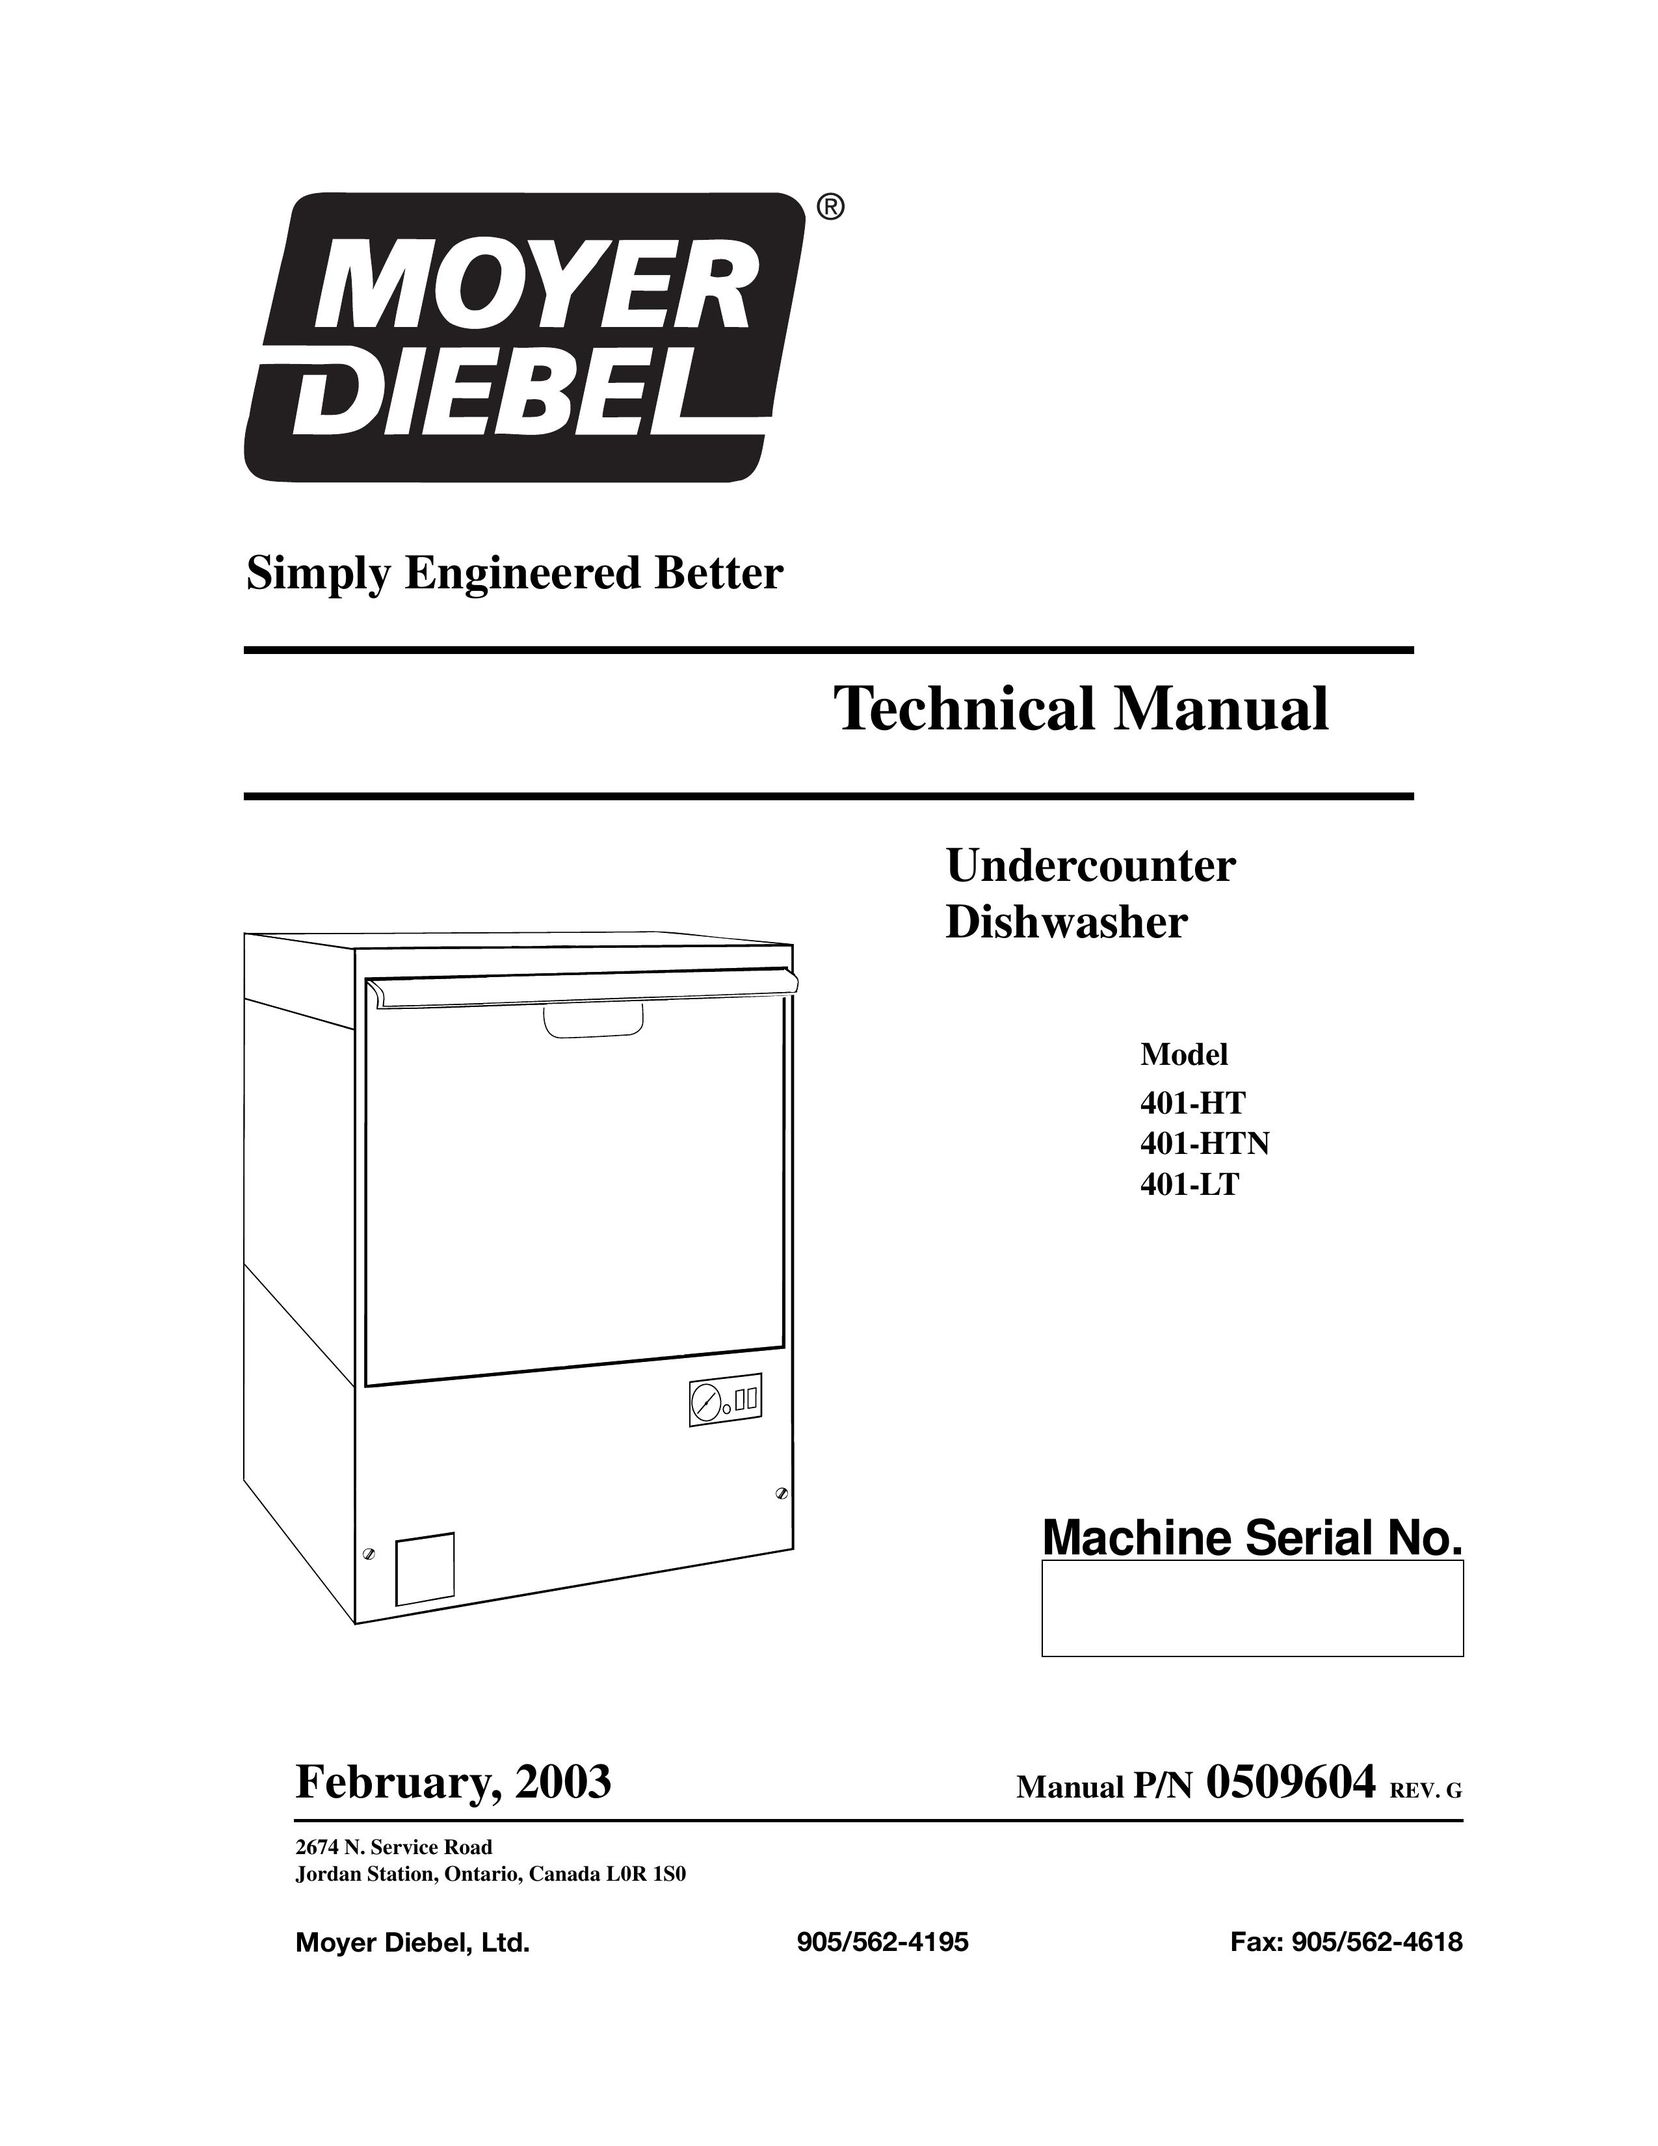 Moyer Diebel 401-HTN Dishwasher User Manual